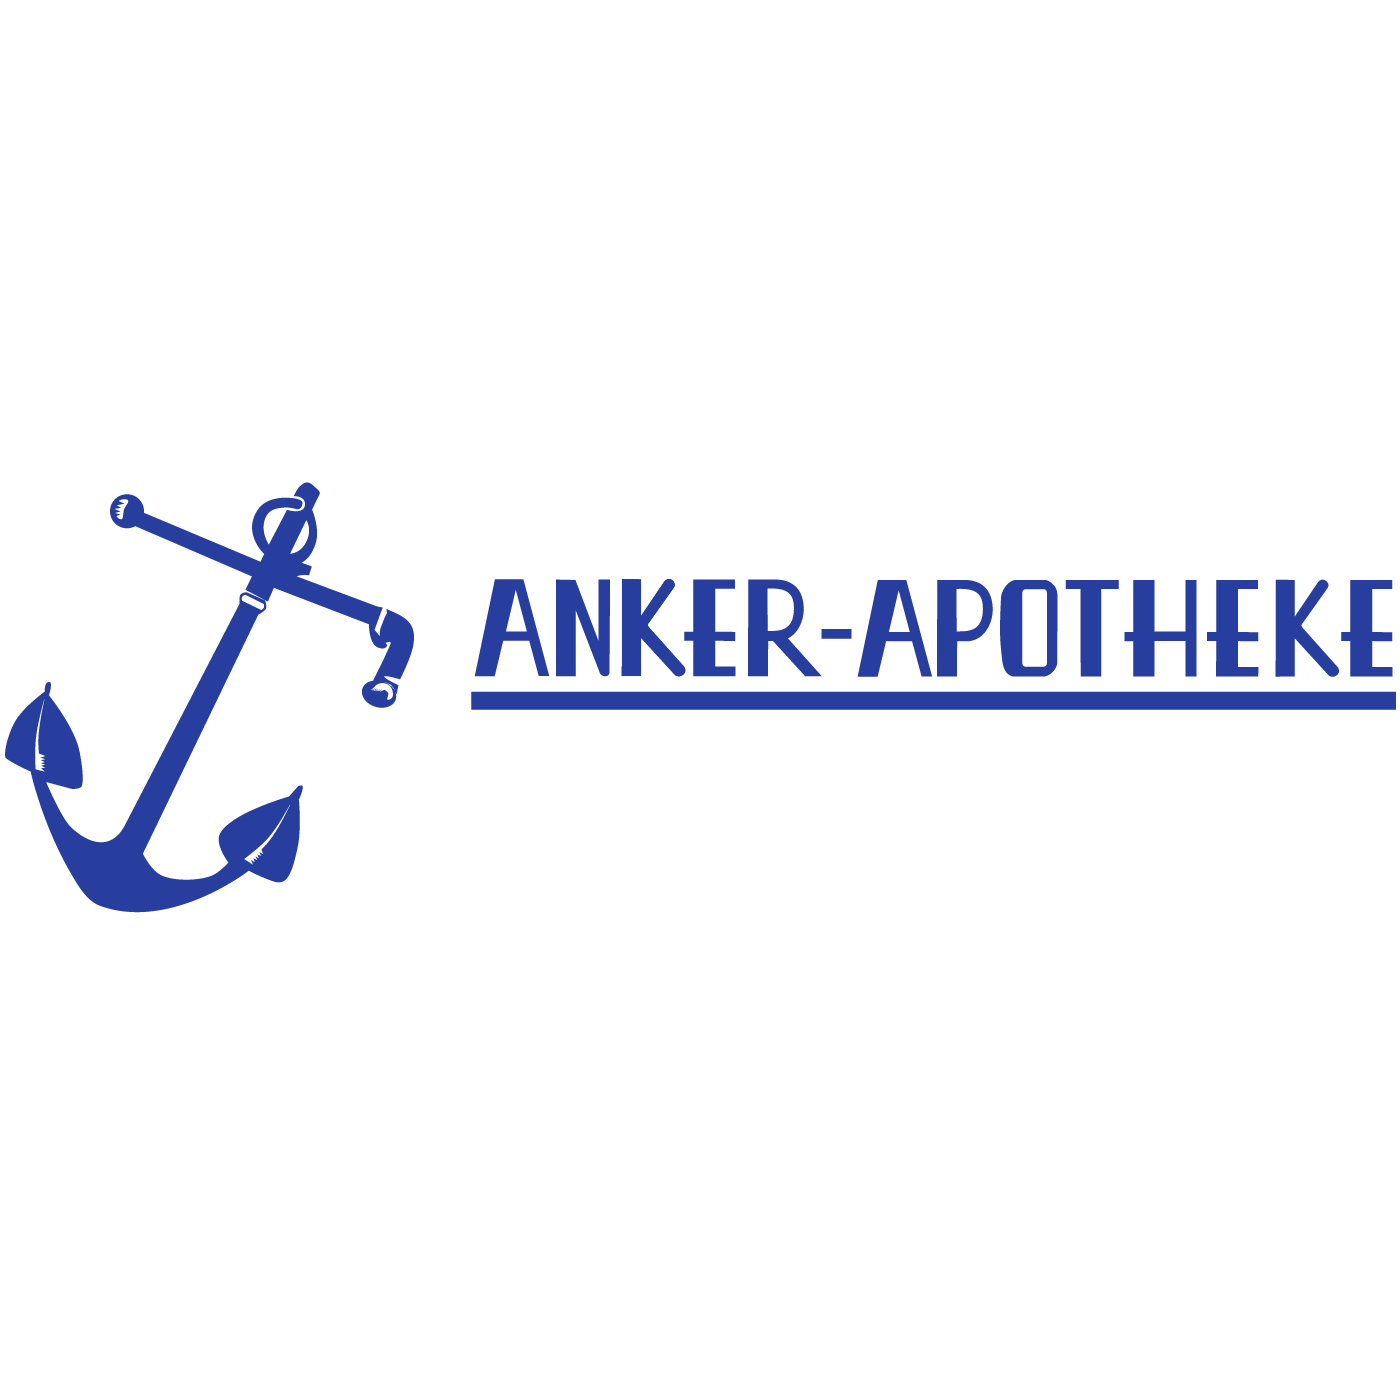 Anker-Apotheke Neermoor in Moormerland - Logo